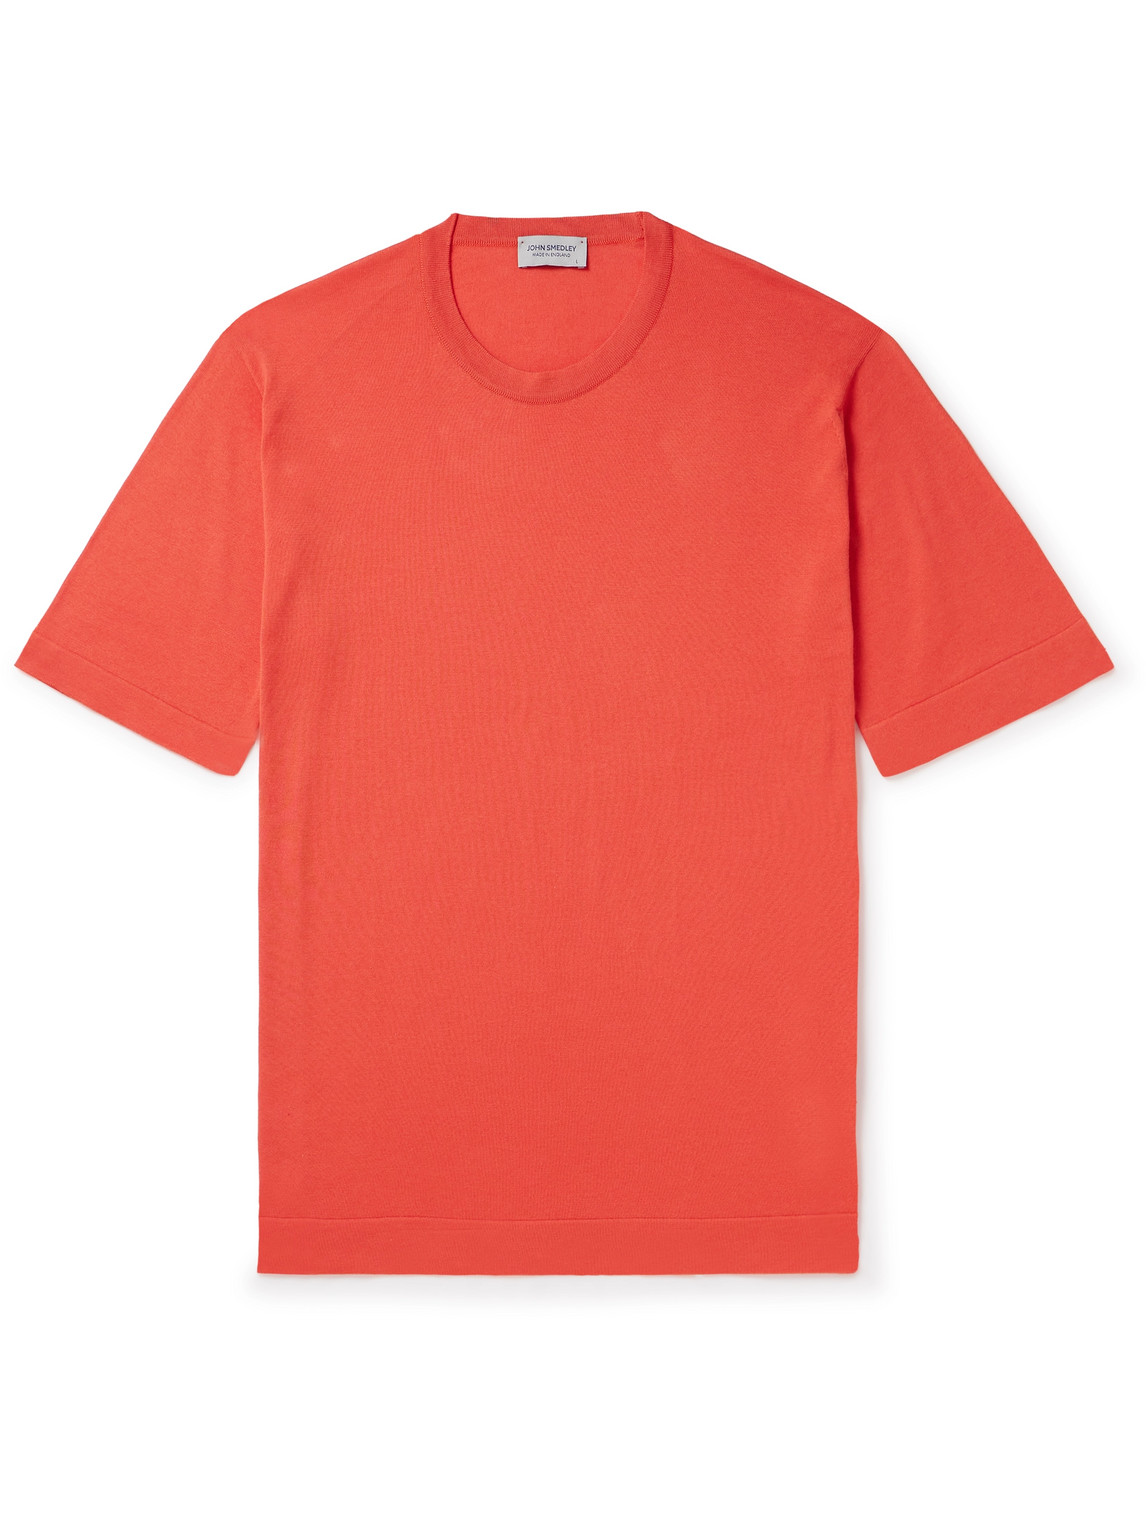 John Smedley - Lorca Slim-Fit Sea Island Cotton T-Shirt - Men - Red - XXL von John Smedley